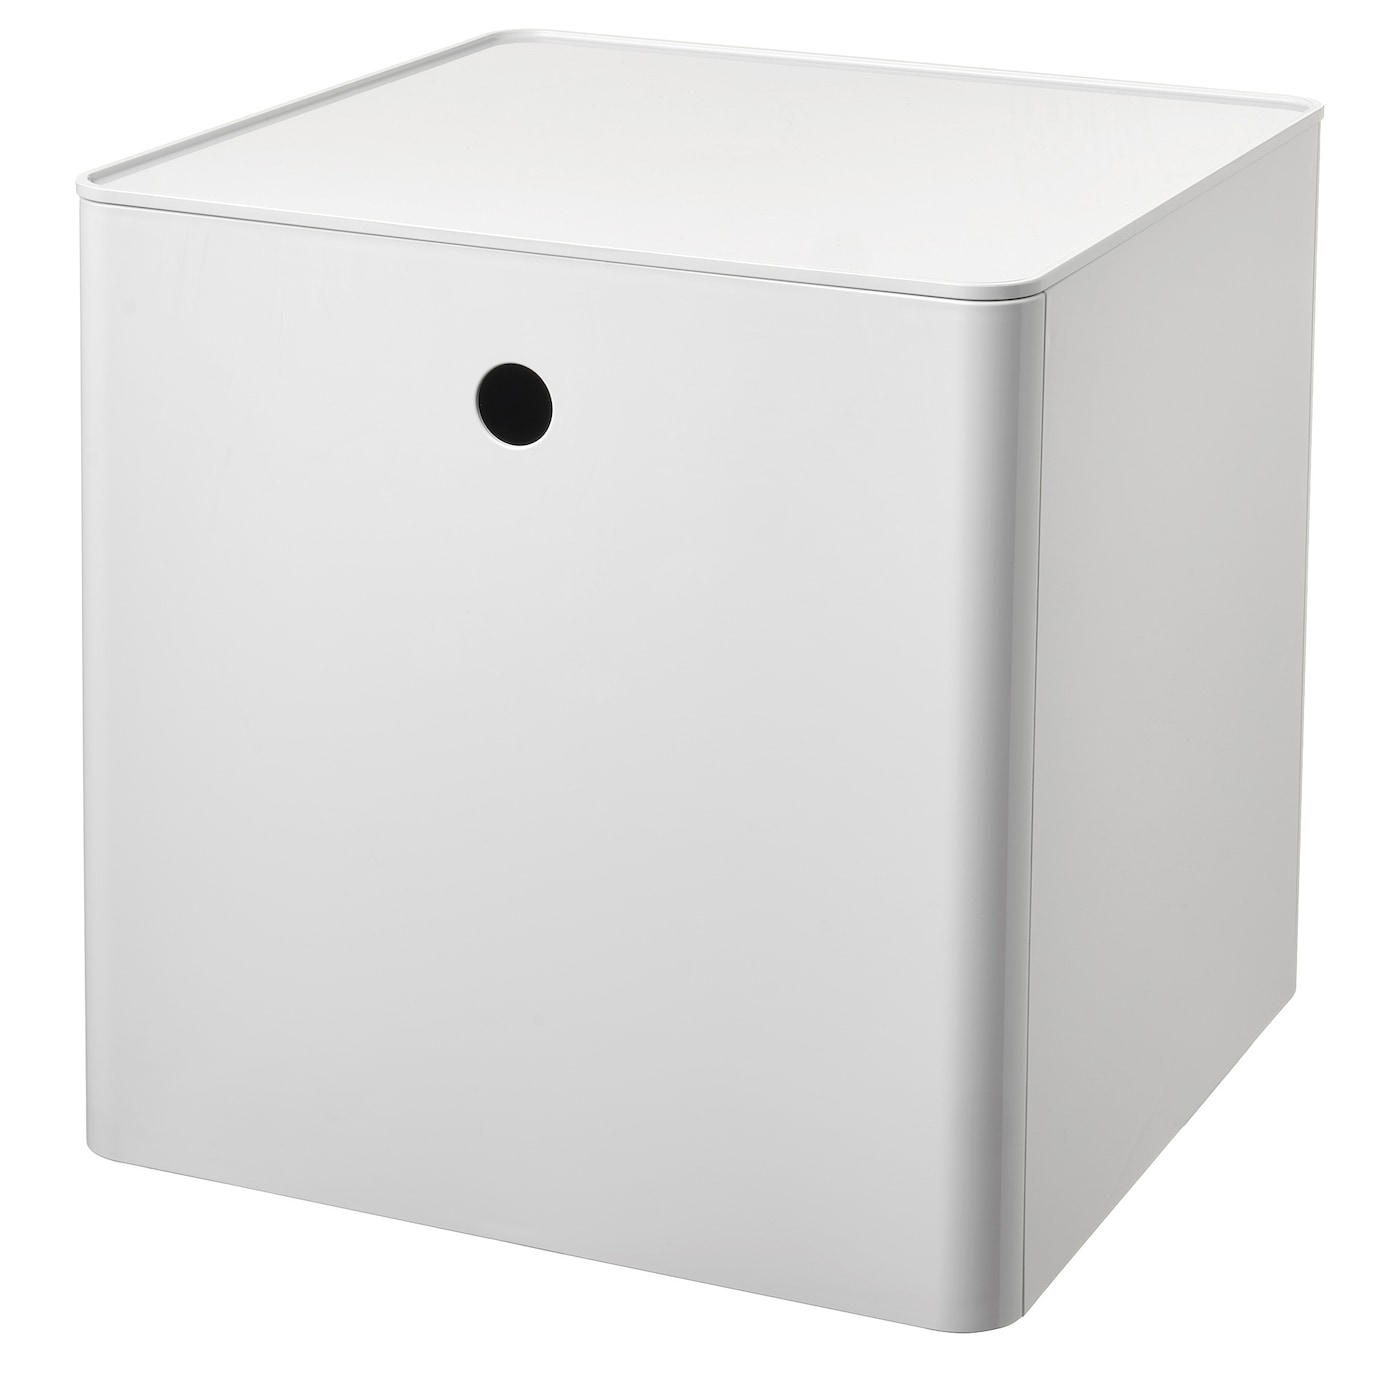 PANSARTAX storage box with lid, transparent gray-blue, 33x33x33 cm